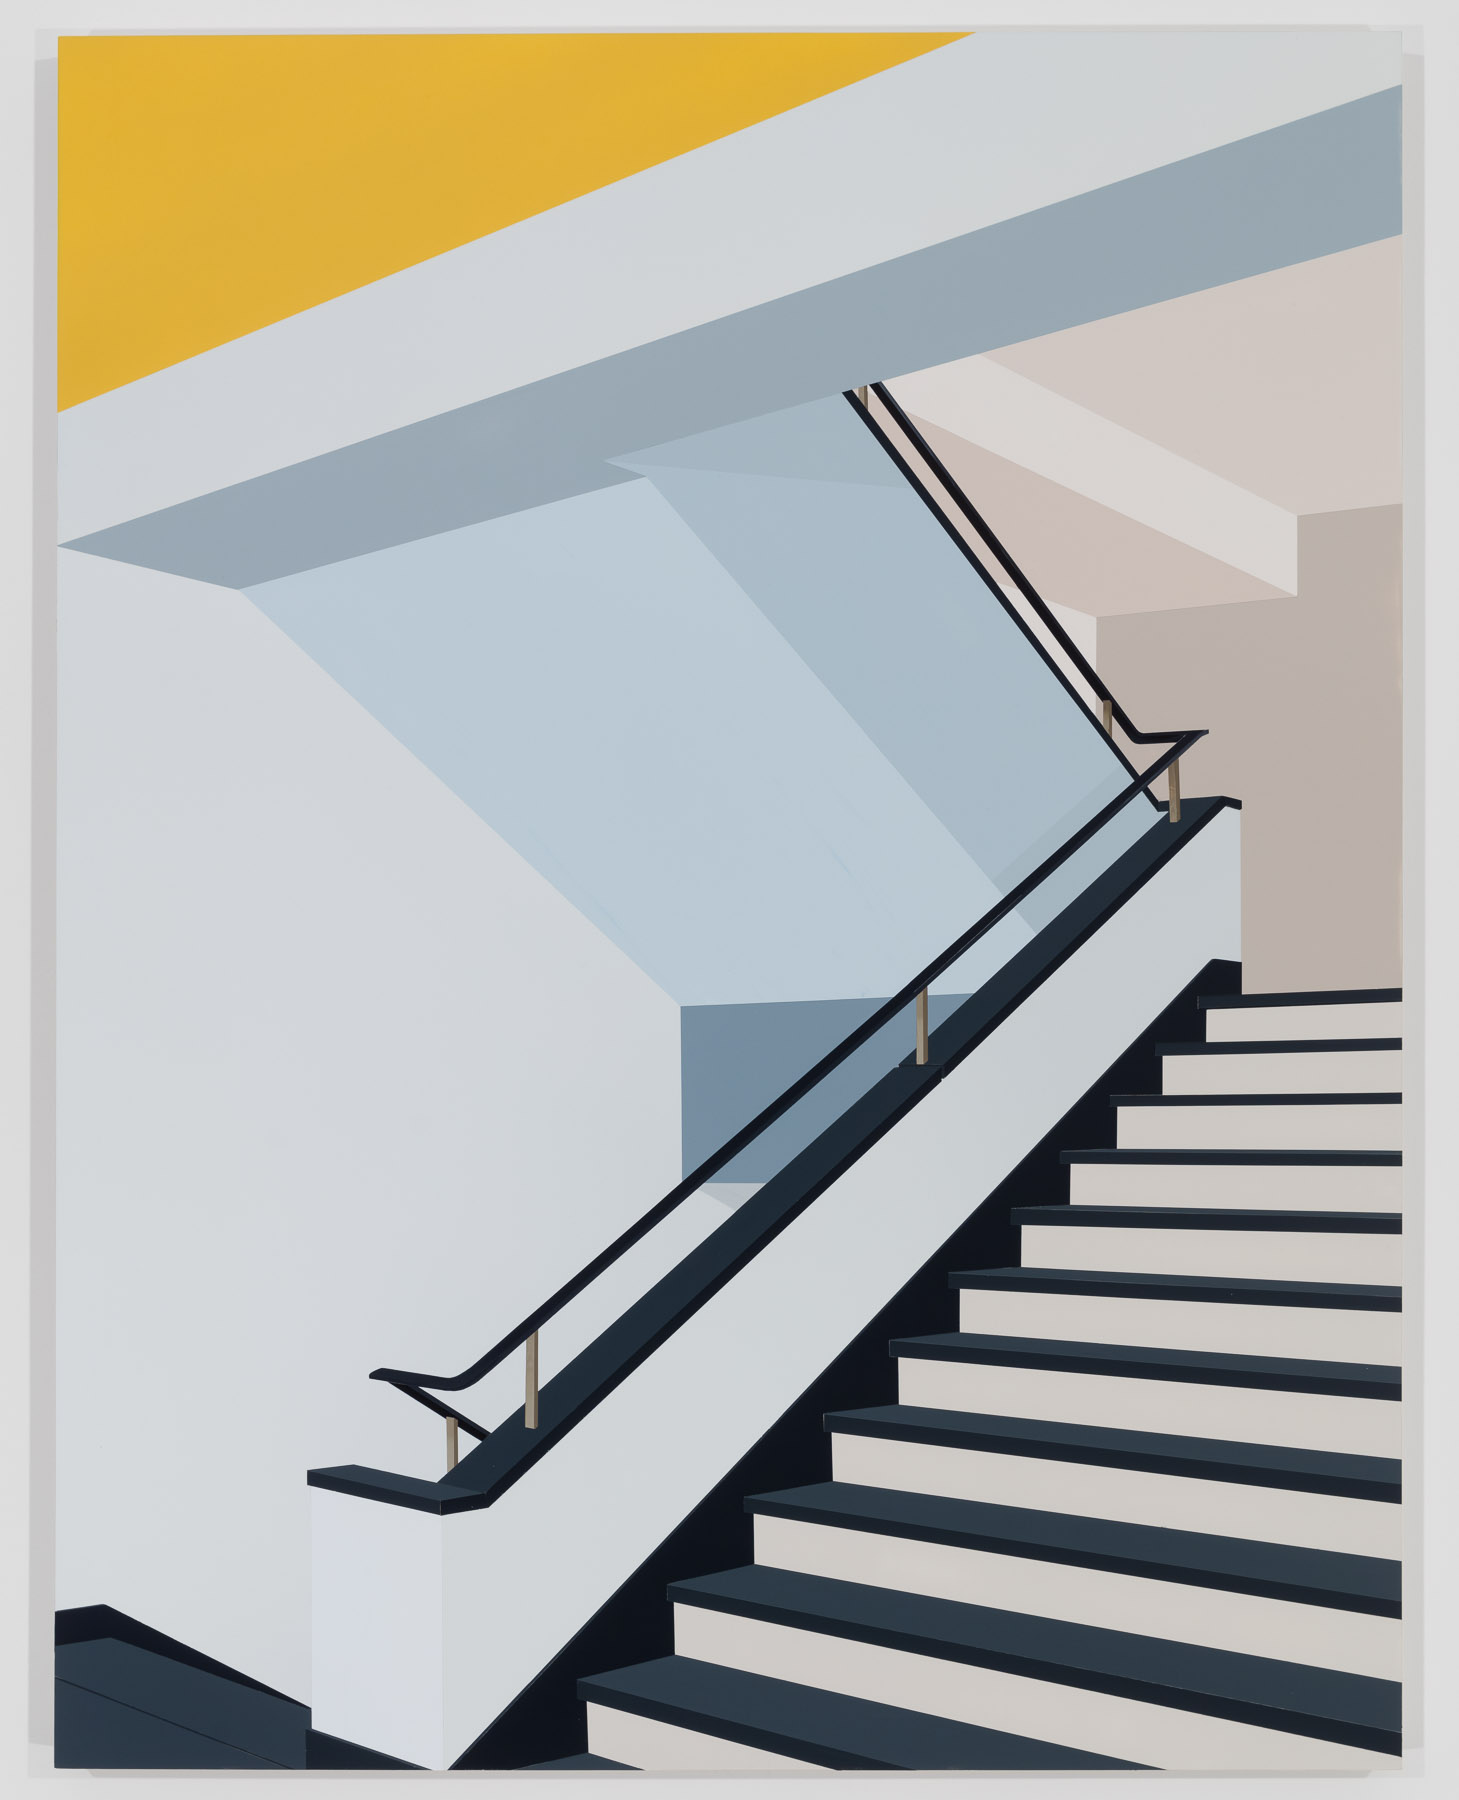 Bauhaus, Dessau, 2018. Acrylic on Dibond, 40 x 31" / 101.6 x 78.7 cm